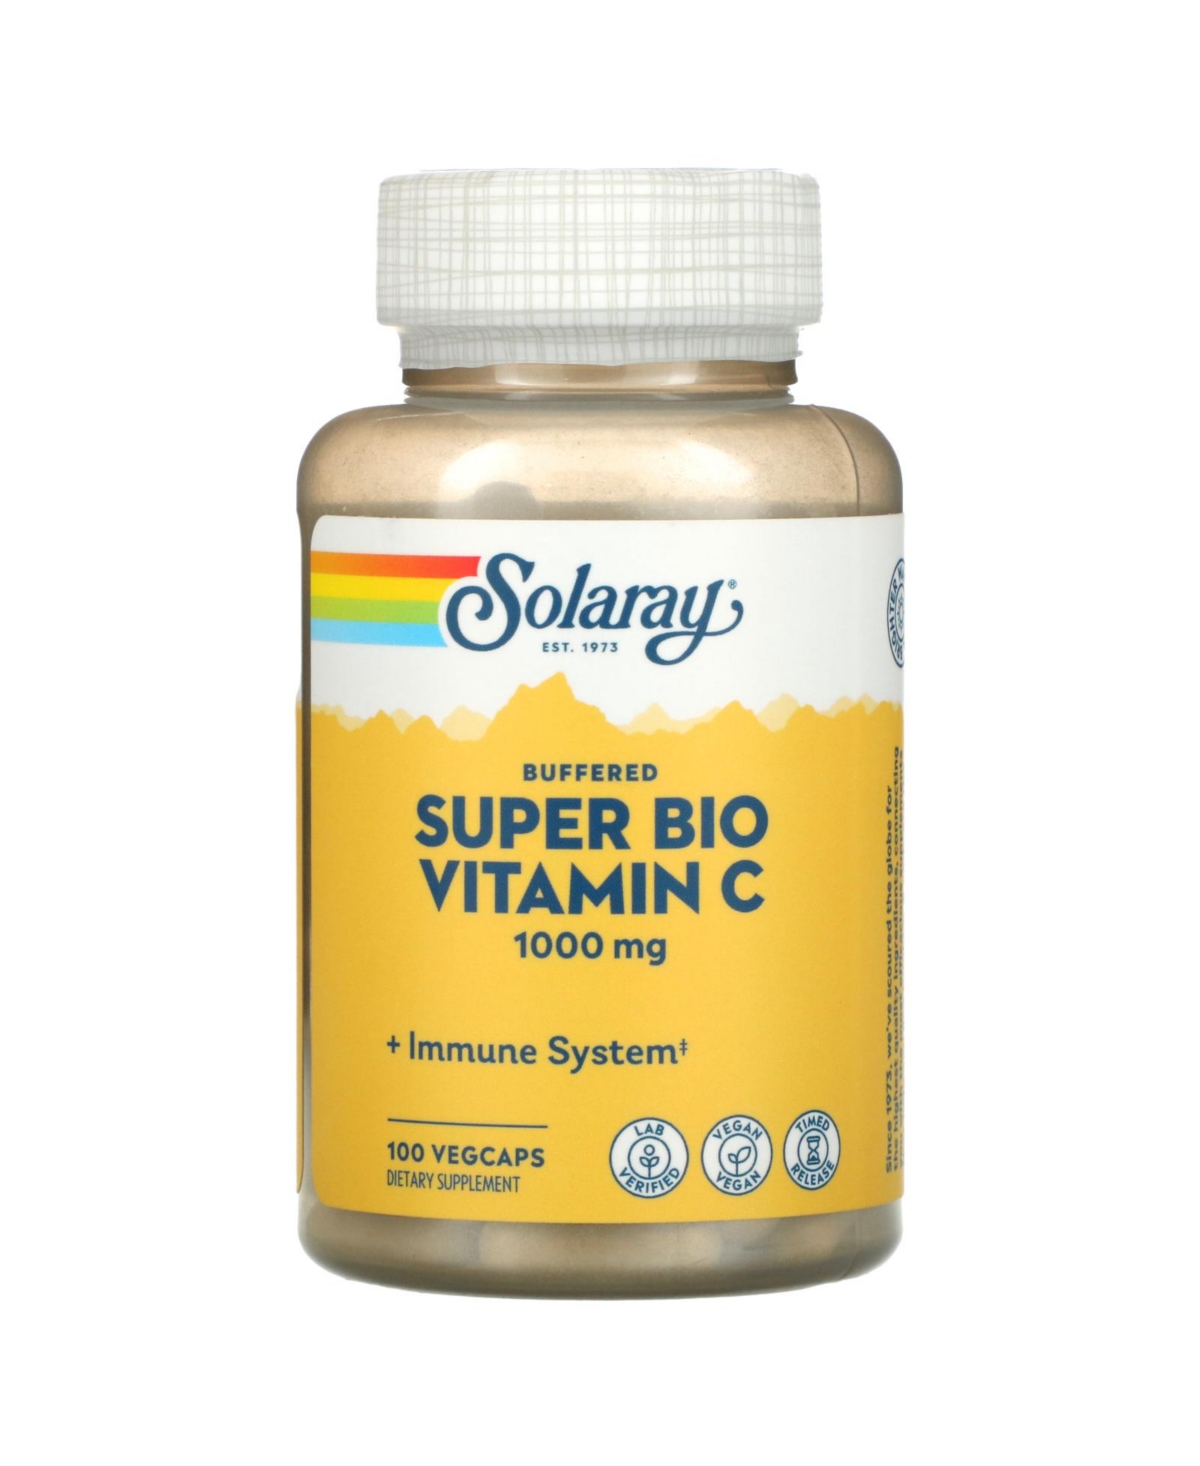 Buffered Super Bio Vitamin C 1 000 mg - 100 VegCaps (500 mg per Capsule) - Assorted Pre-pack (See Table